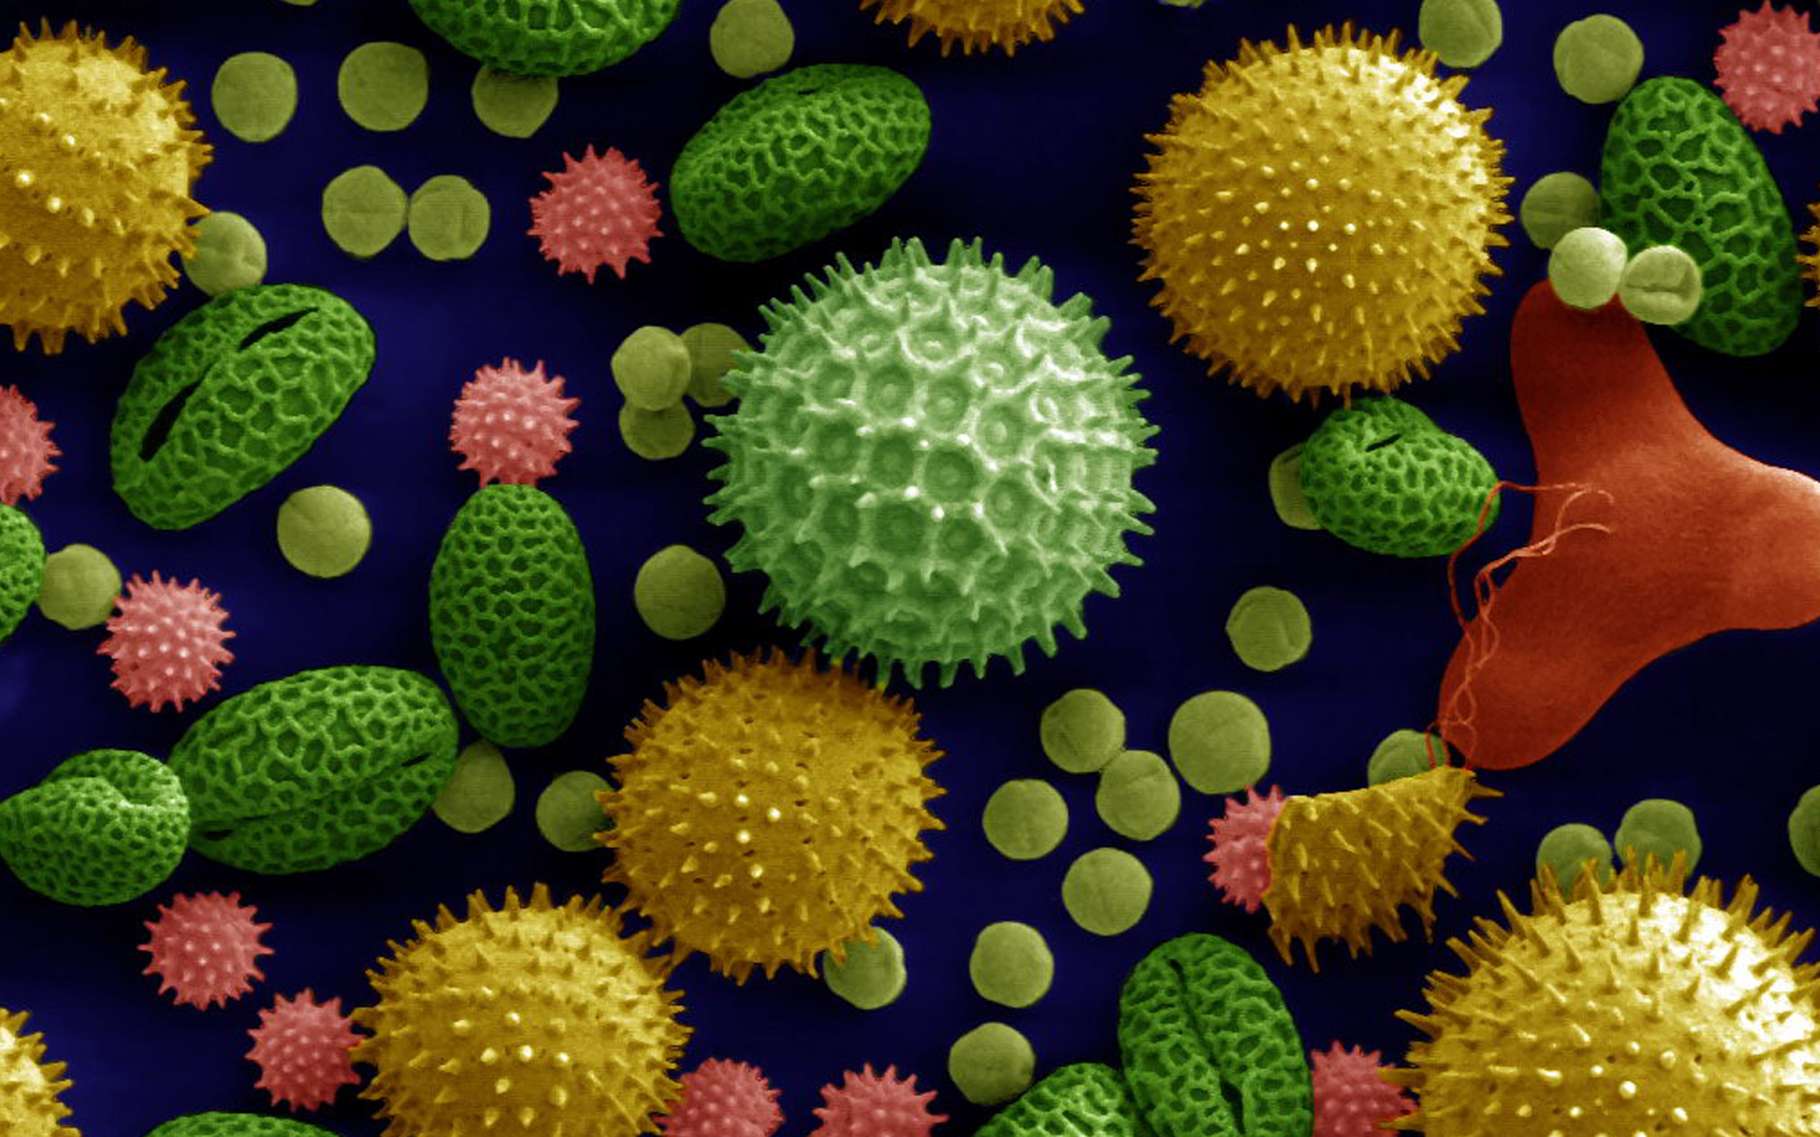 Бактерии вирусы грибы биология. Бактерии вирусы грибки. Микробы и бактерии под микроскопом. Грибы микроорганизмы. Бактерии и вирусы под микроскопом.